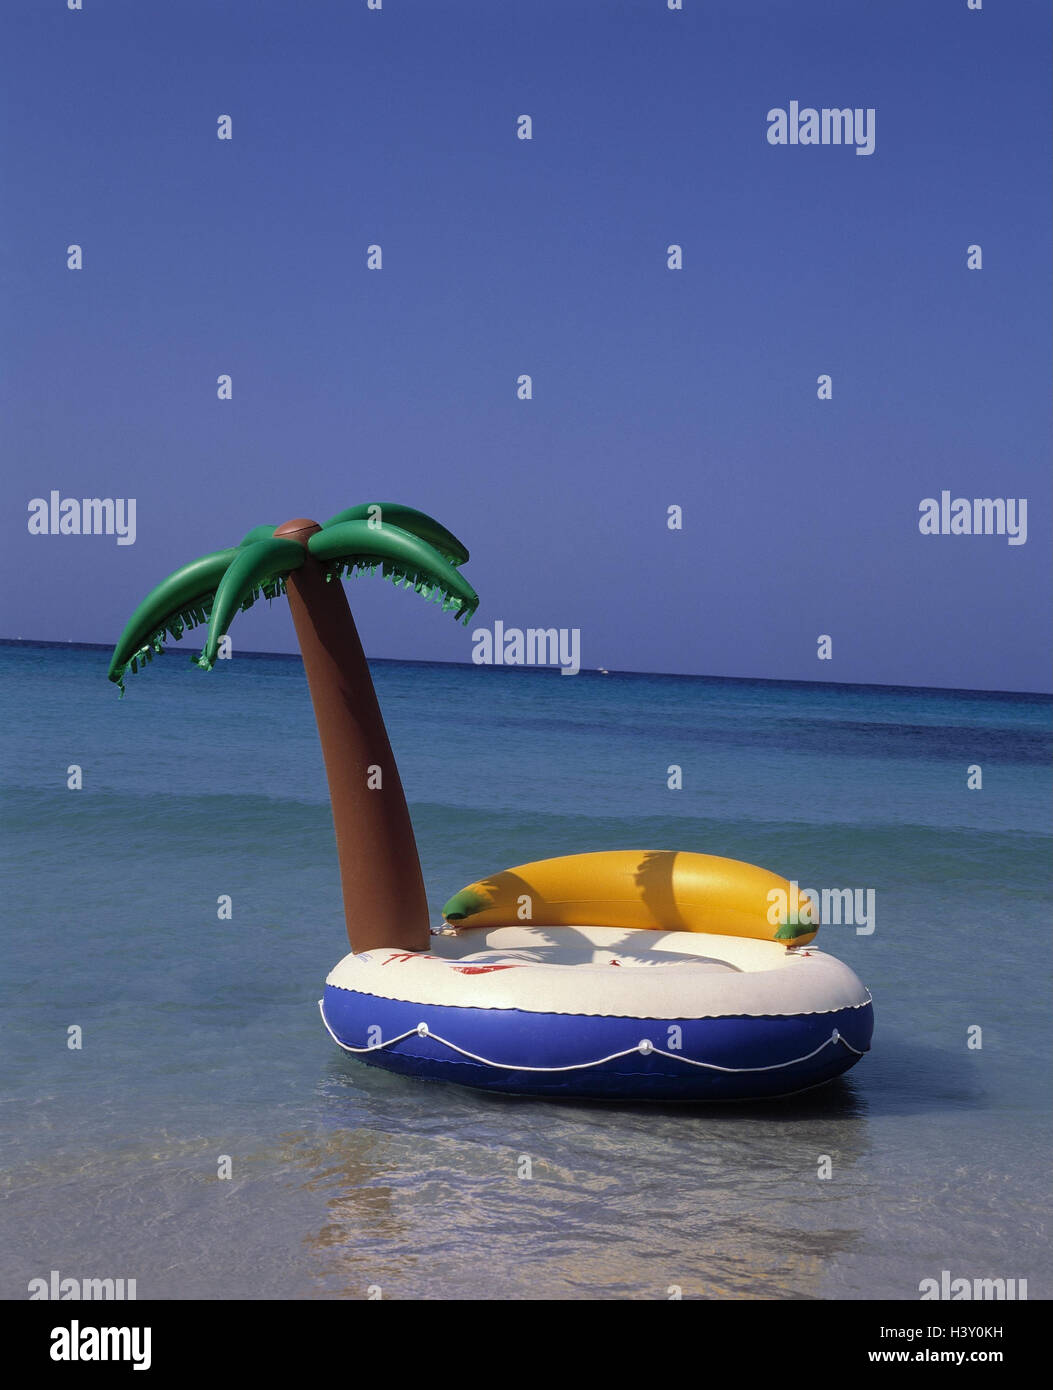 Sea, palm island, pneumatically, swim, water, Still life, toys, swimming help, teaser, vacation, holidays, water, summers, island, solar island Stock Photo